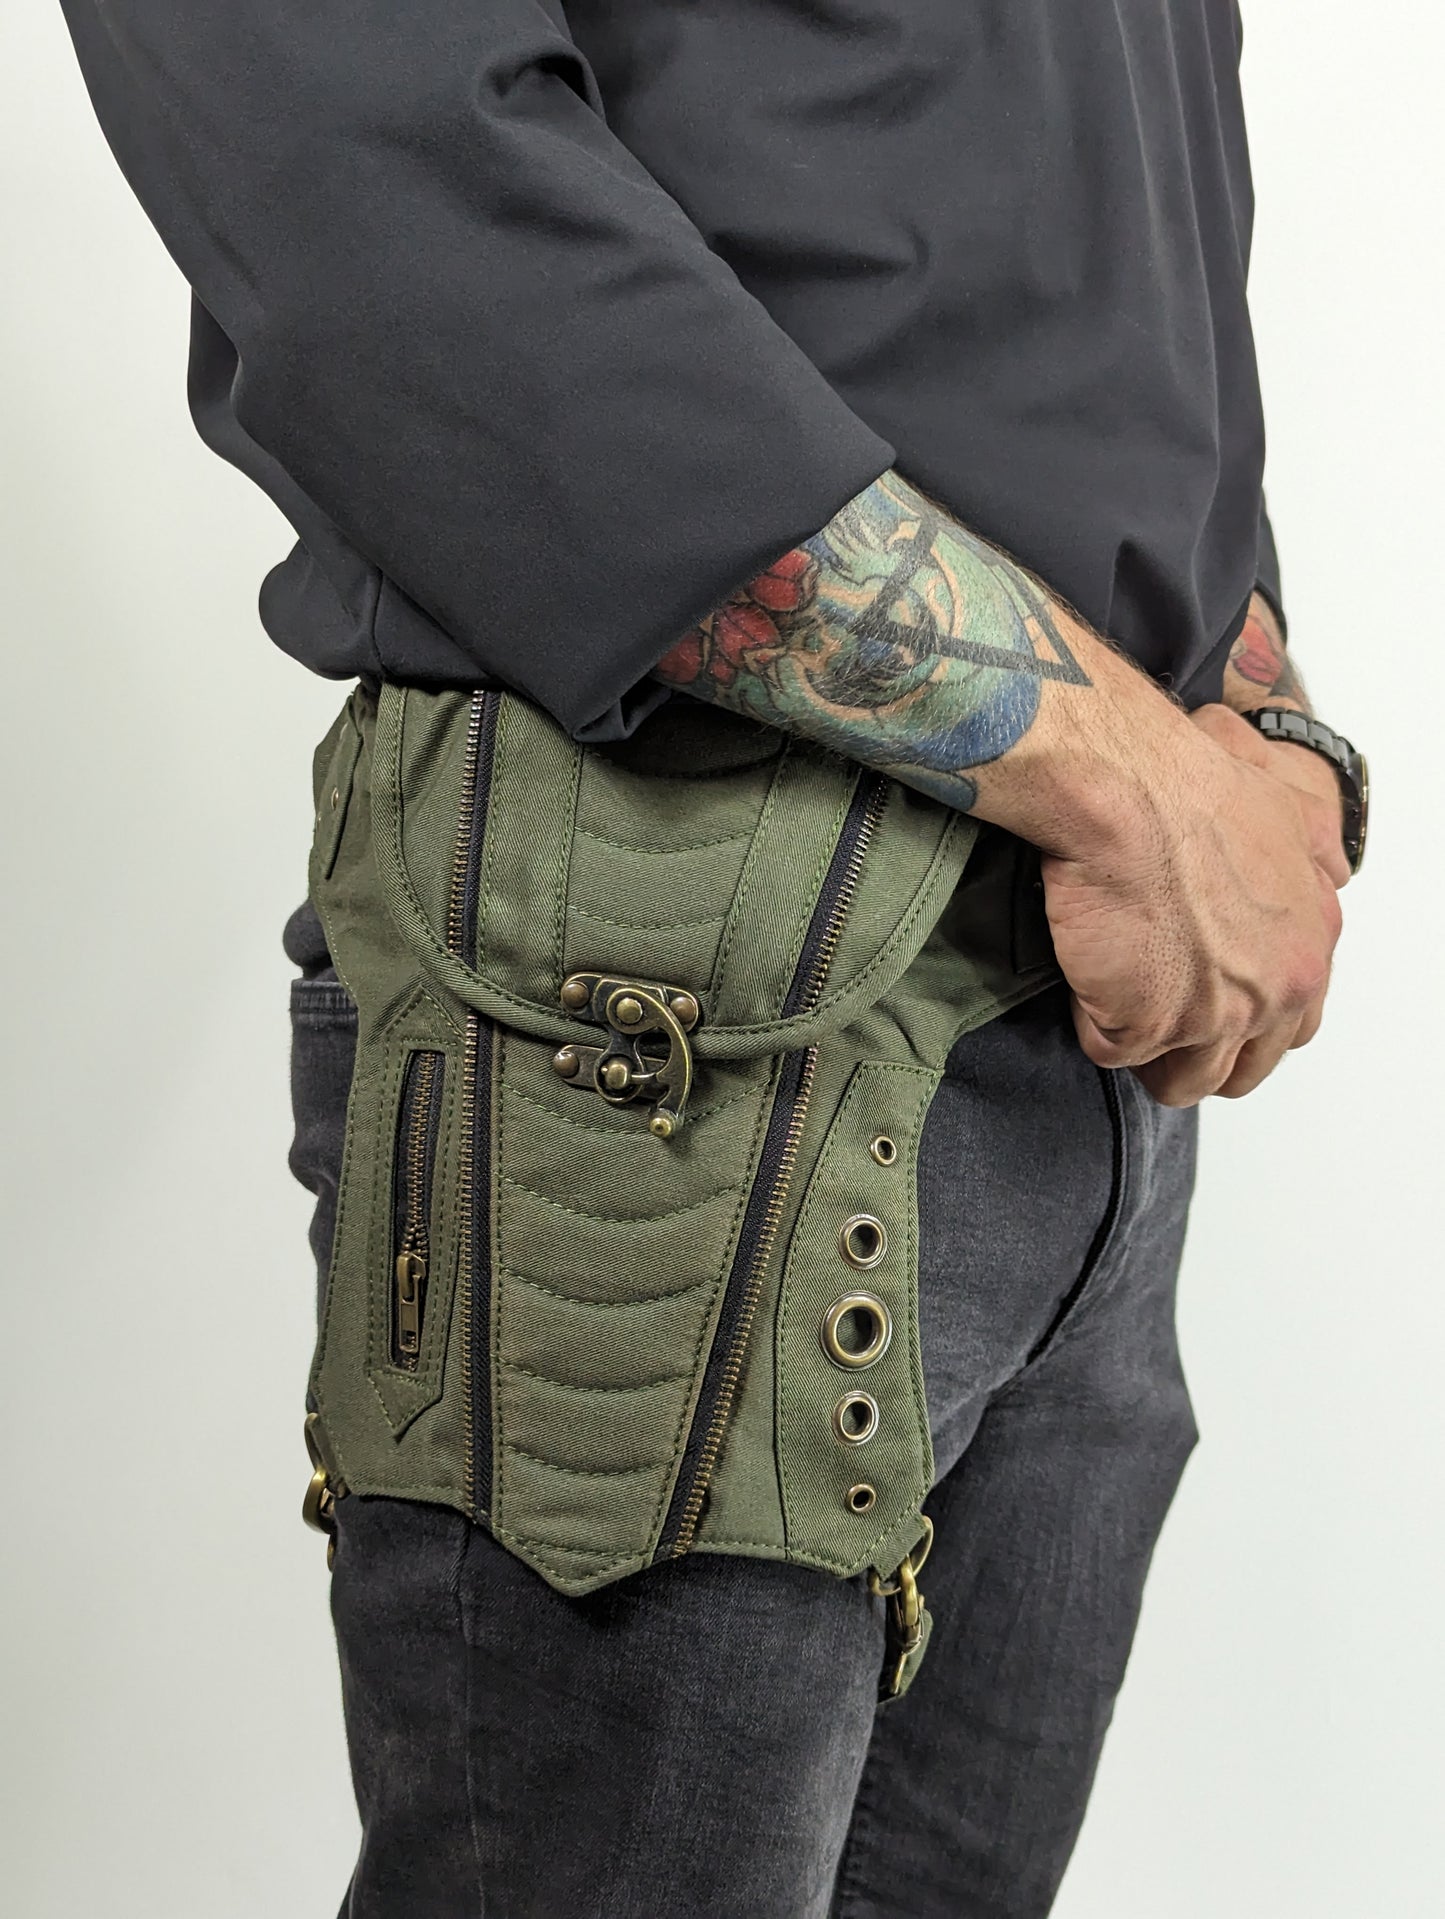 Bliss Pockets - hip holster